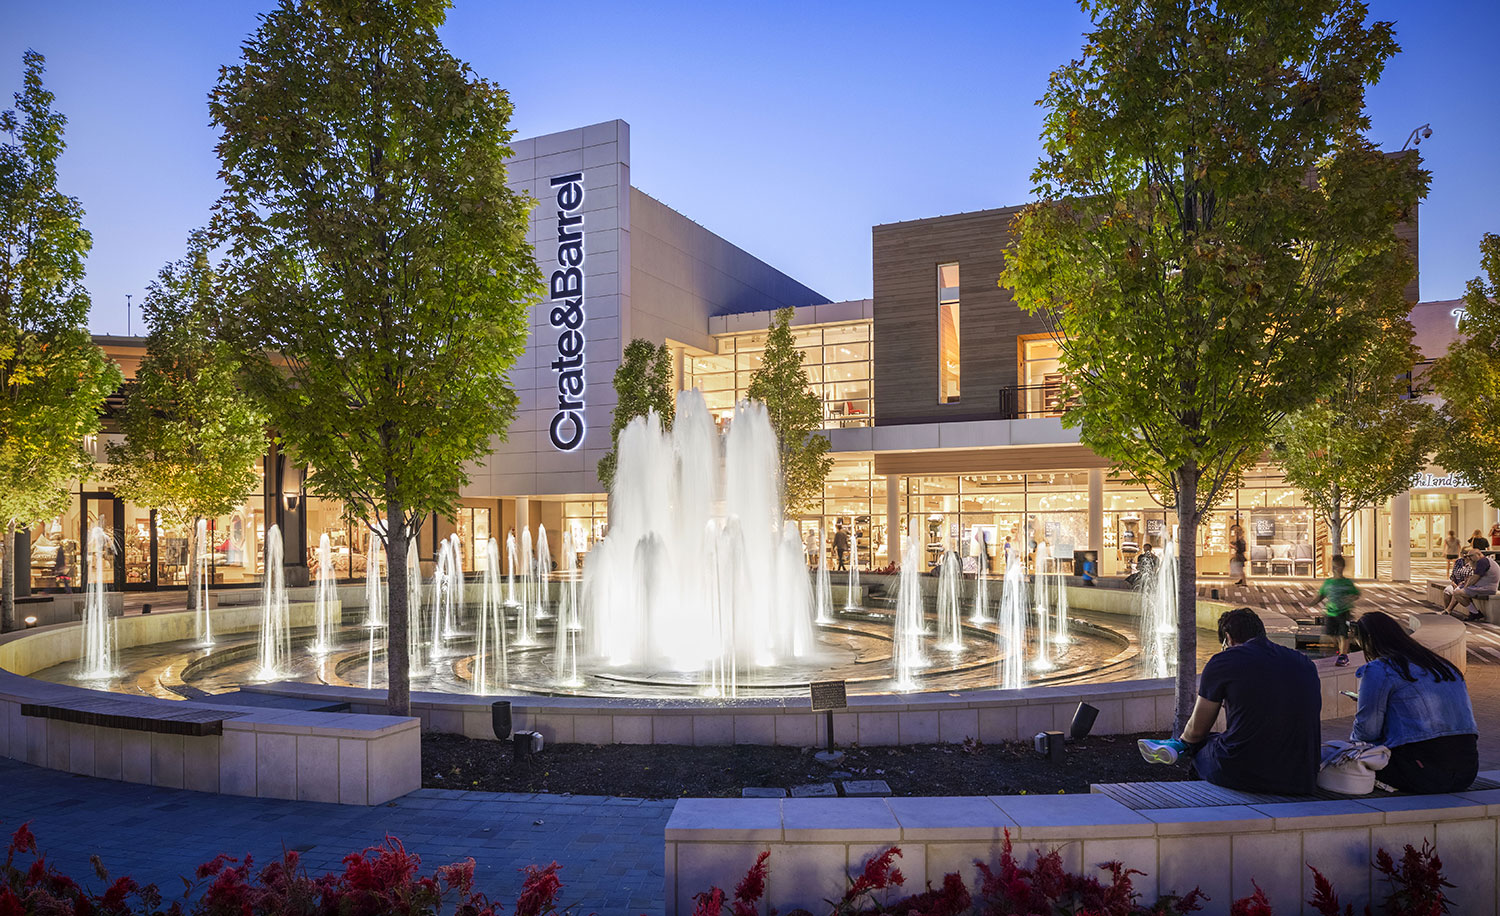 Malls of America: Oakbrook Center